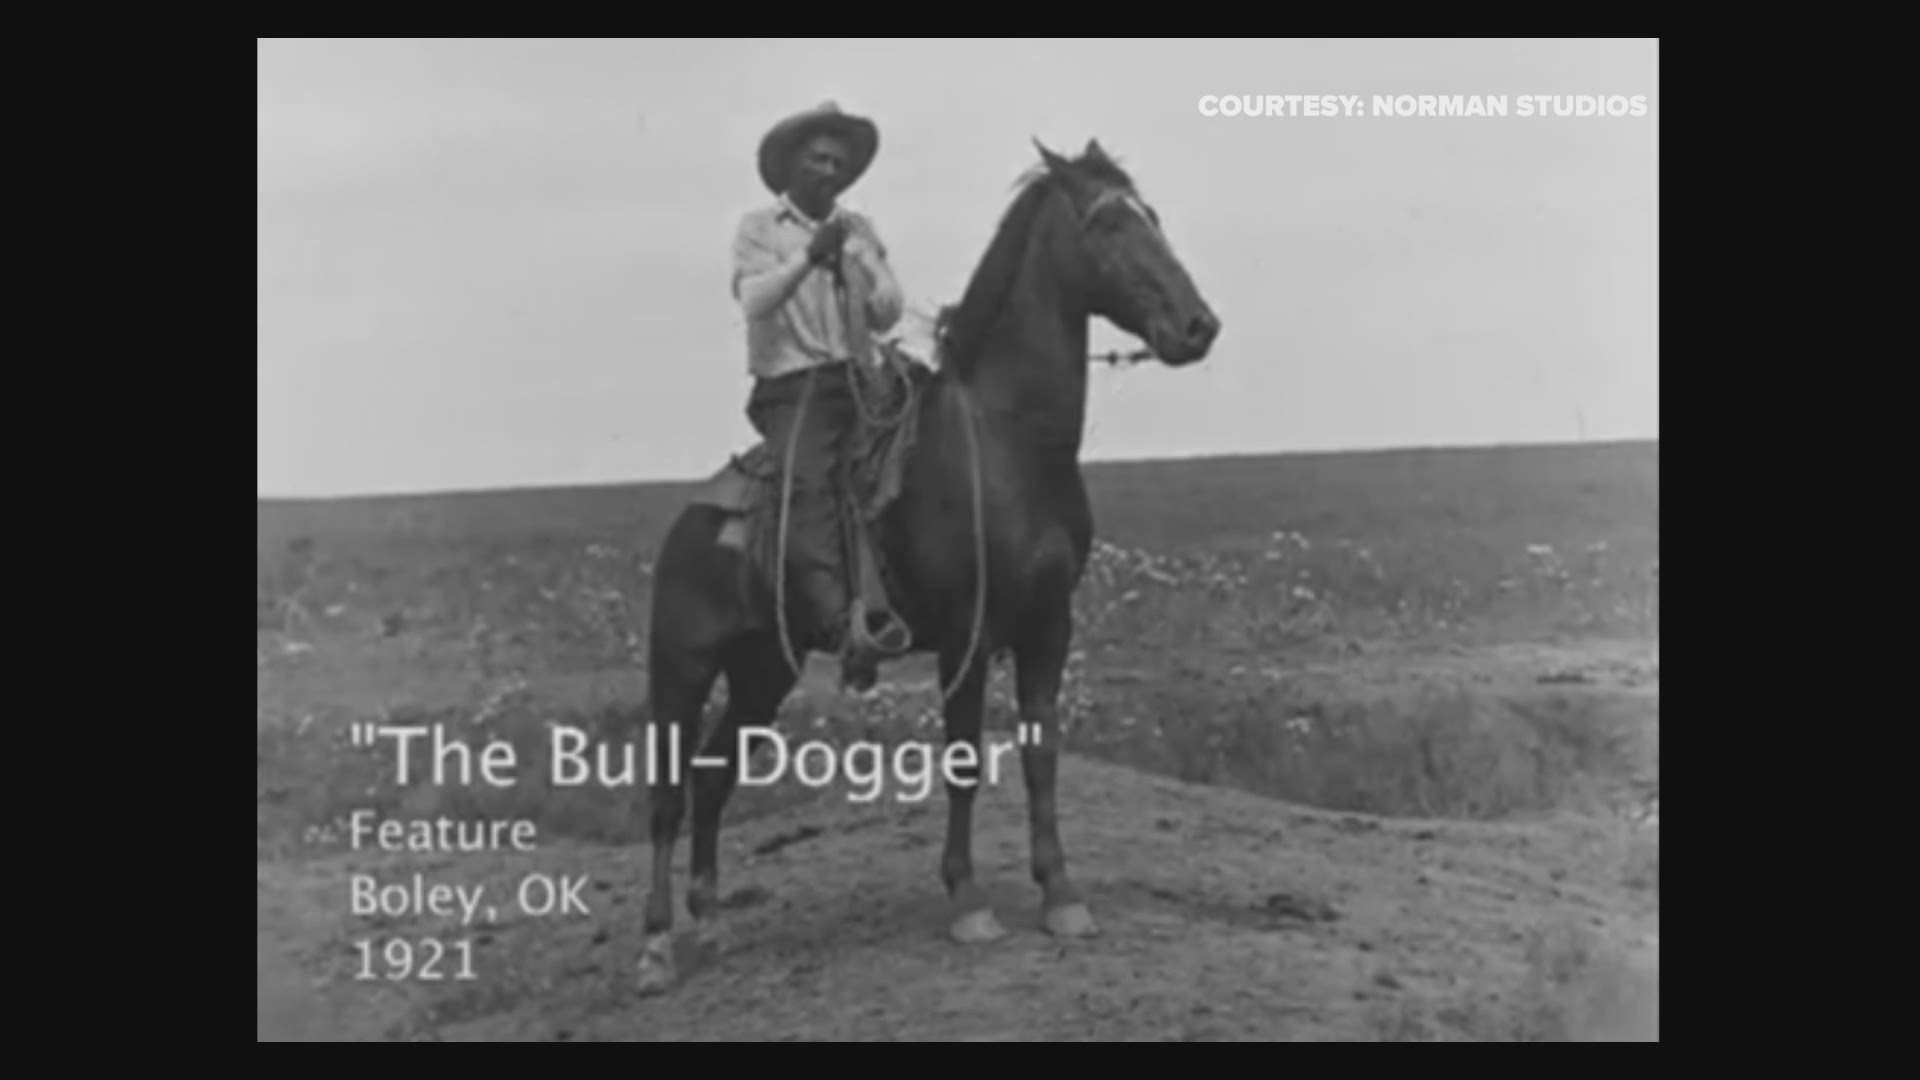 In 1921, Bill Pickett starred in the film The Bull Dogger.